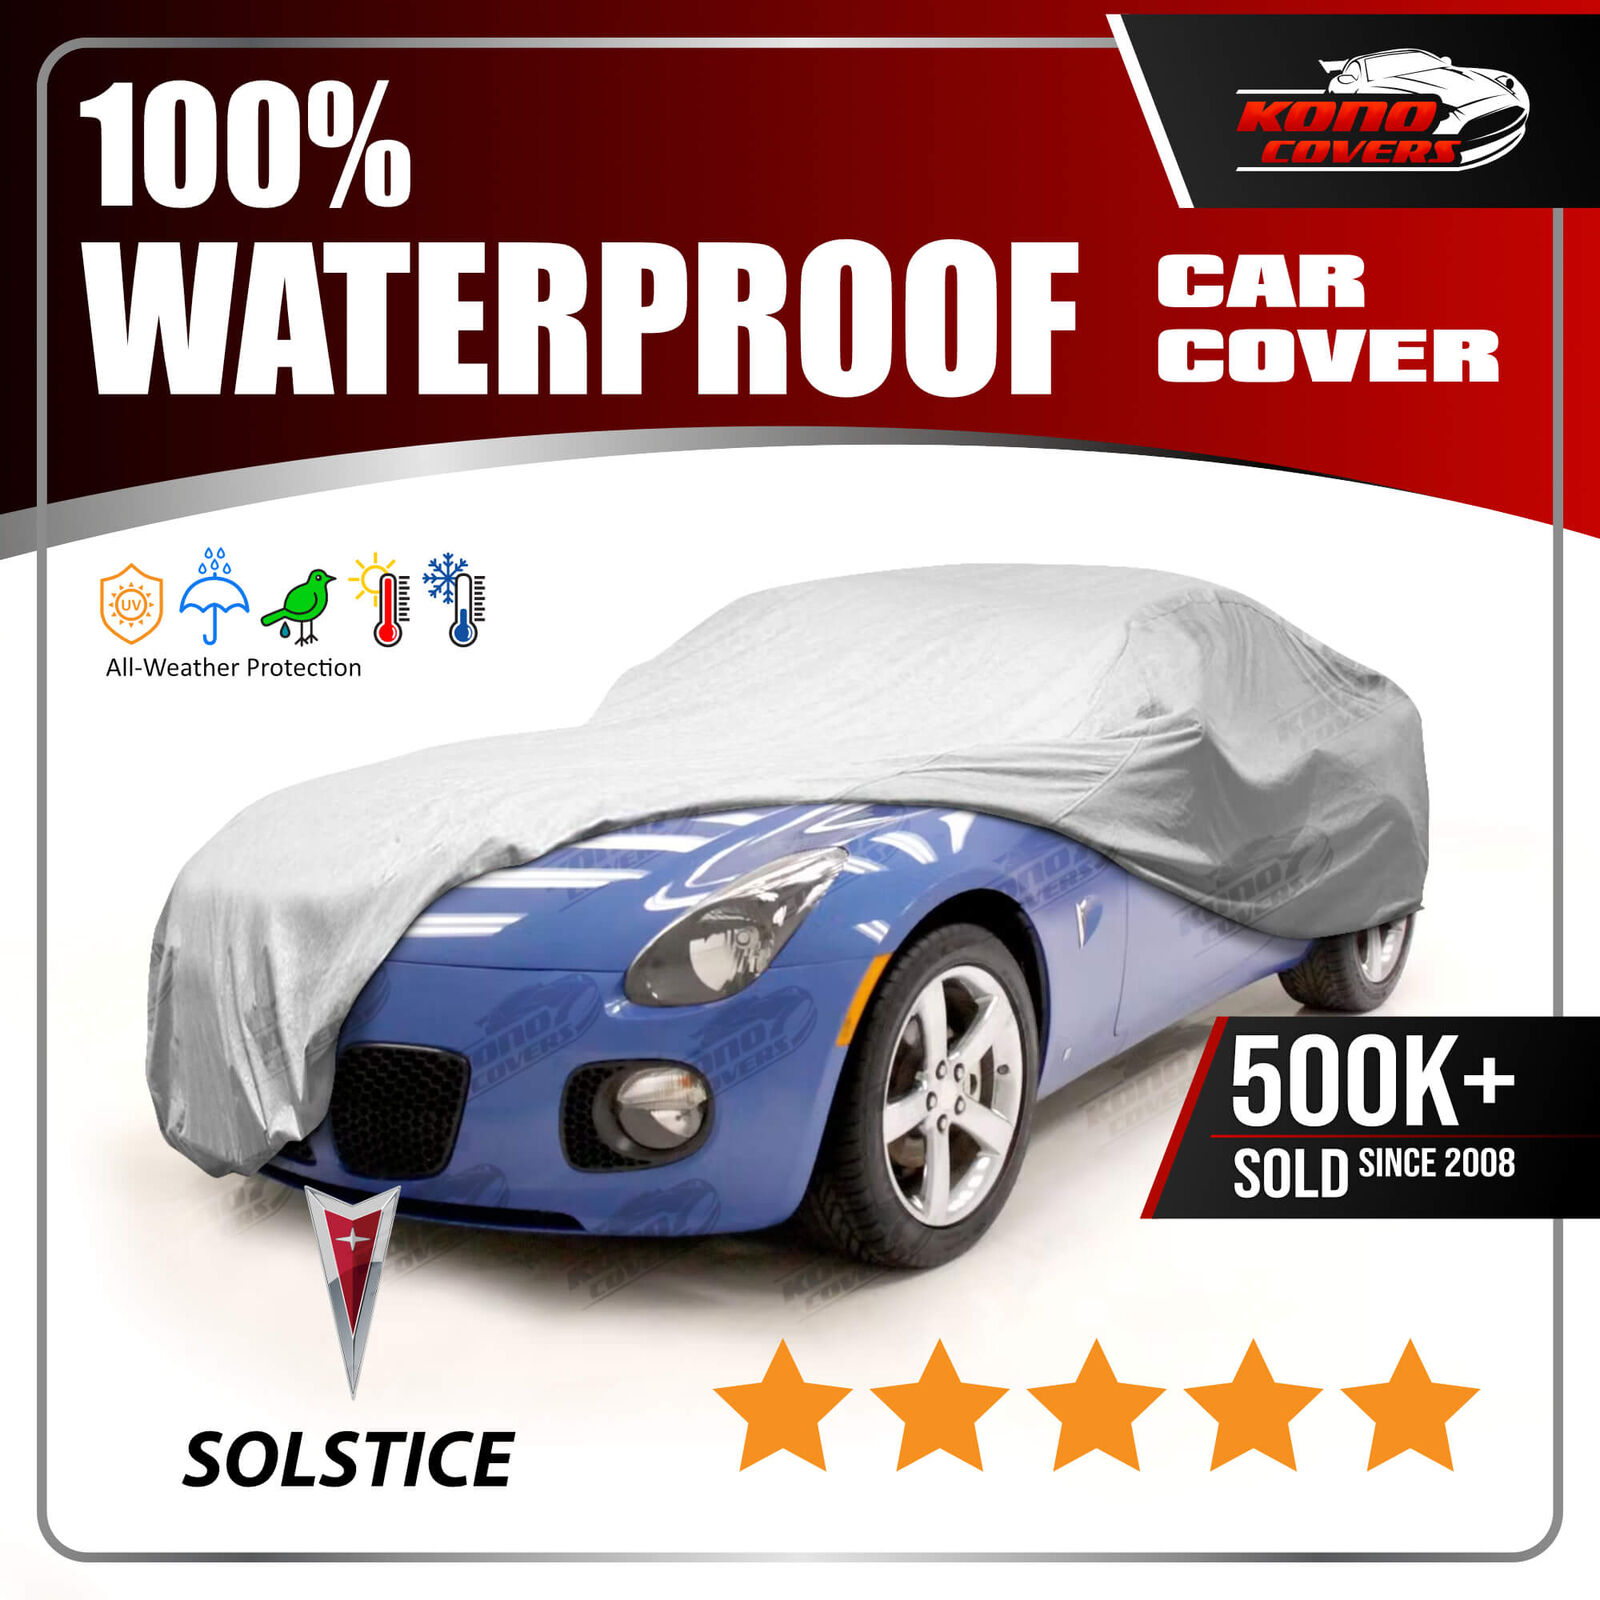 PONTIAC SOLSTICE 2006-2010 CAR COVER - 100% Waterproof 100% Breathable